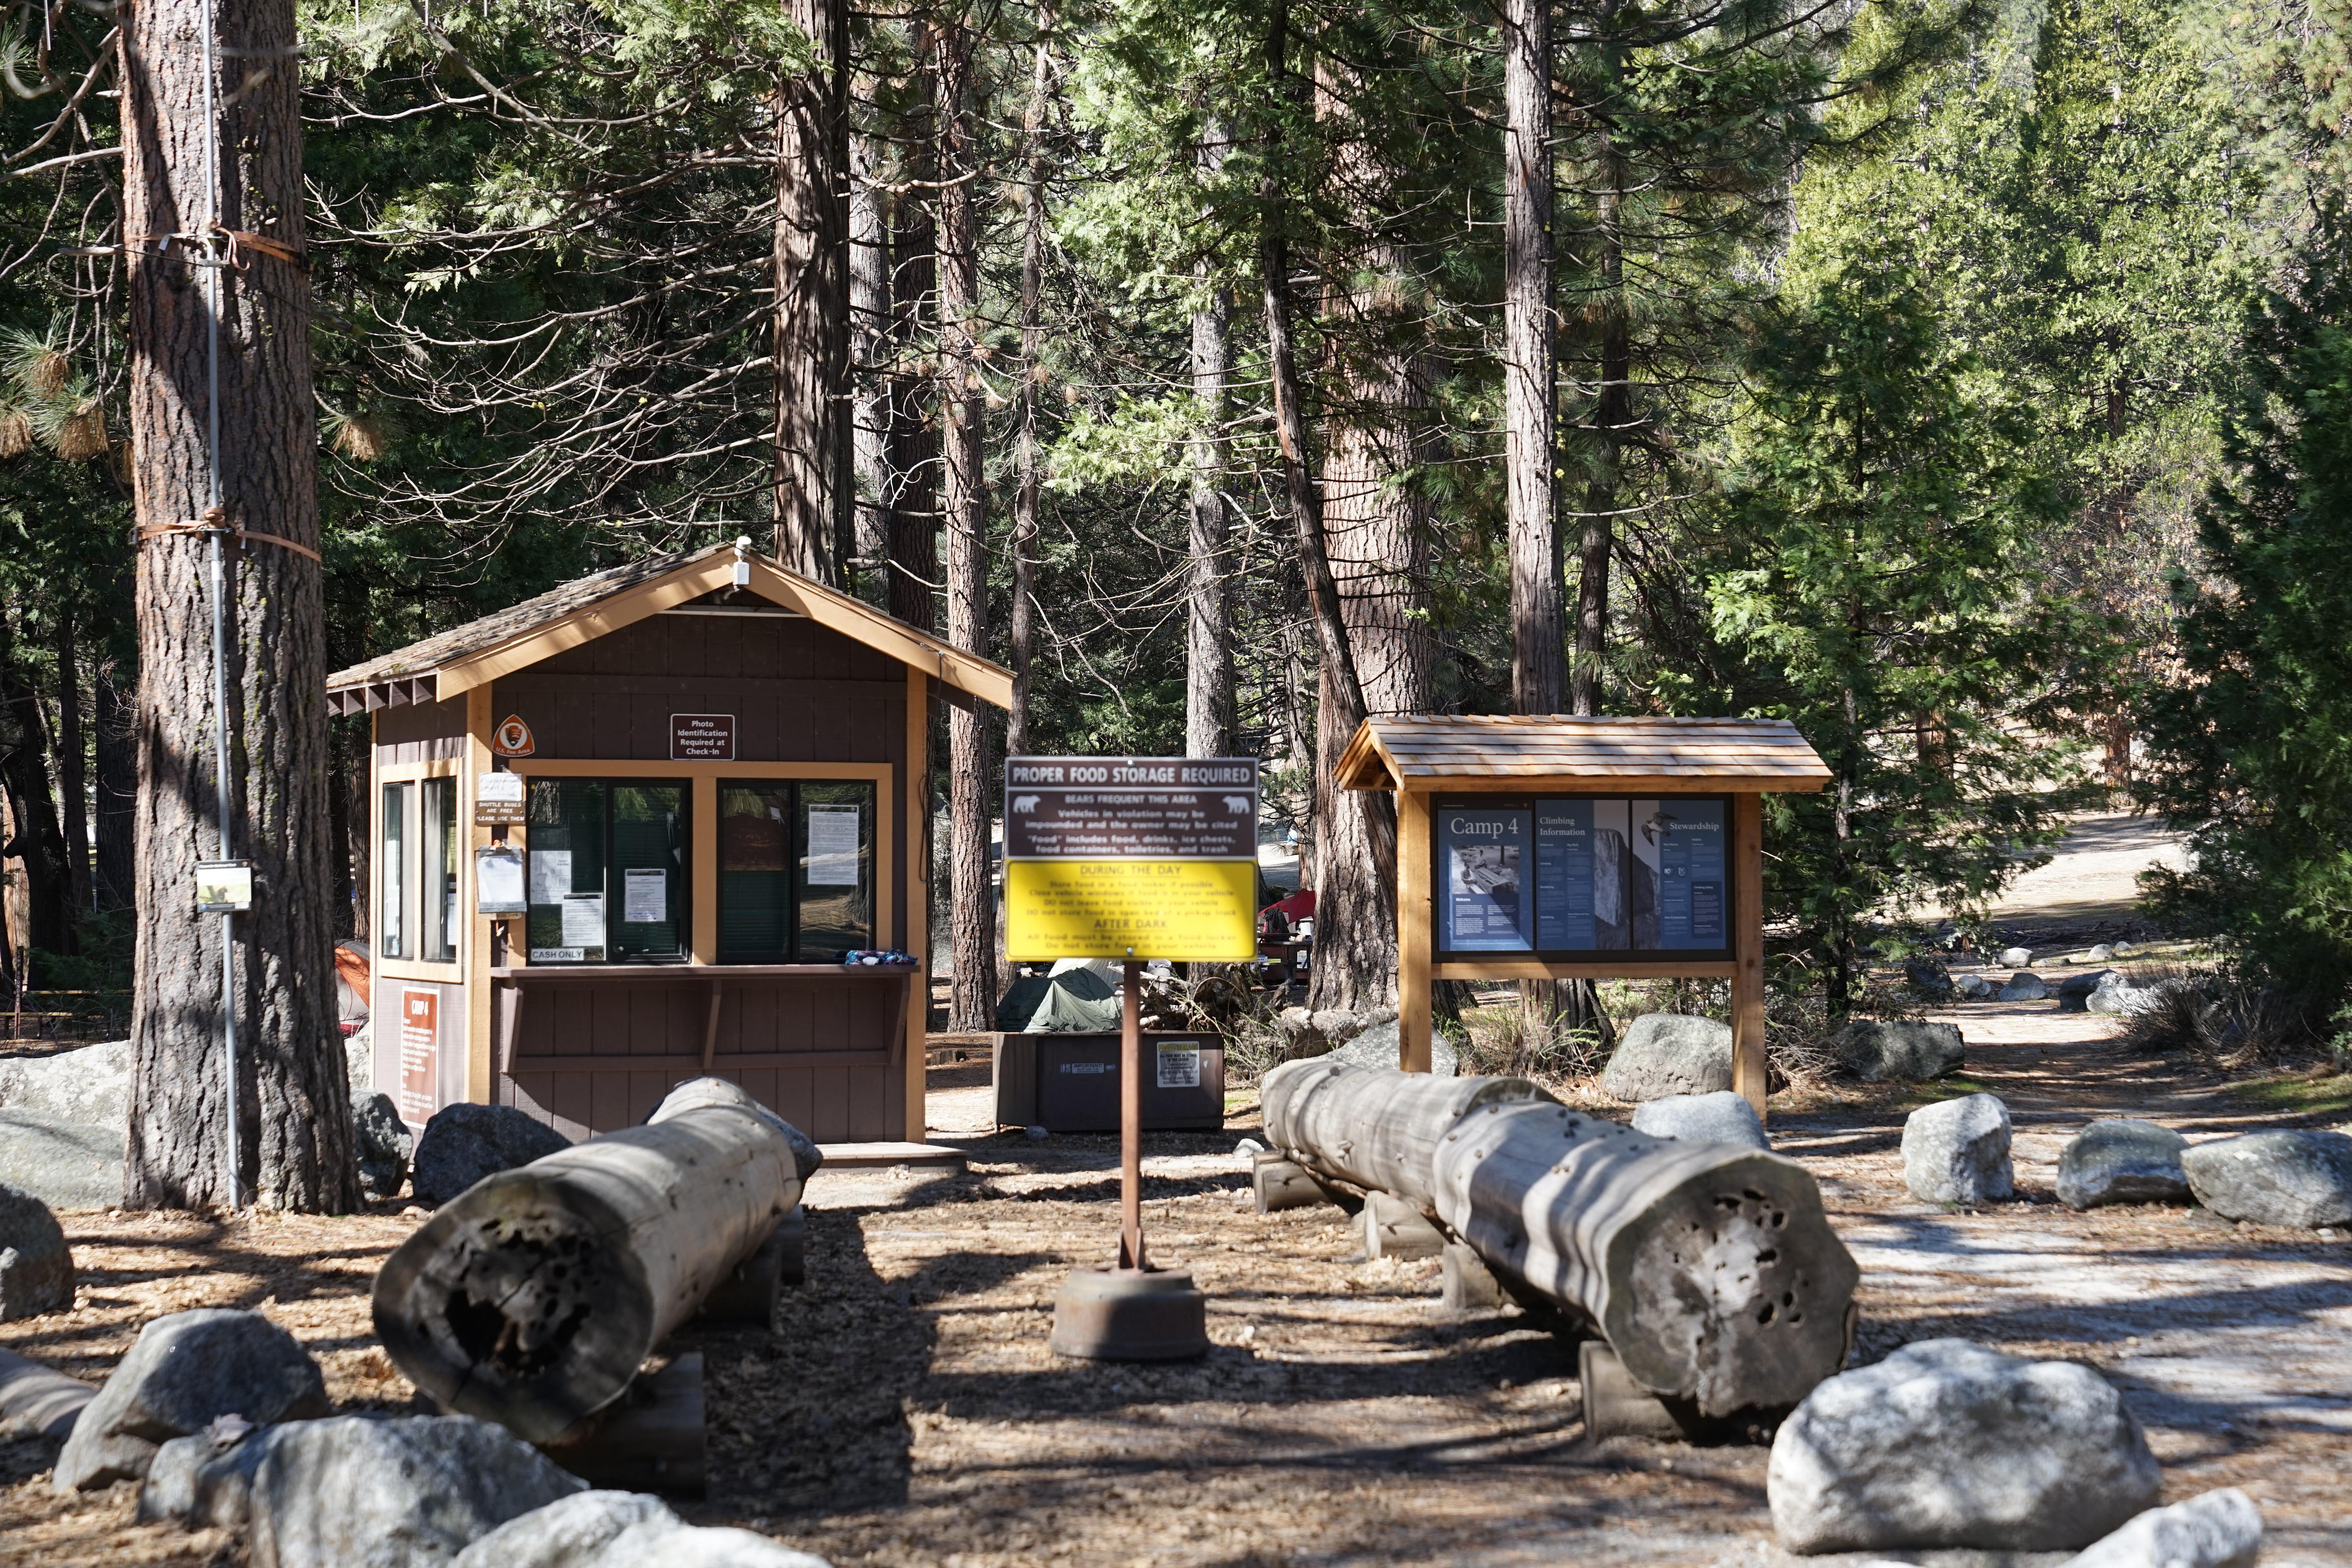 Camp 4 - Yosemite National Park (U.S. National Park Service)